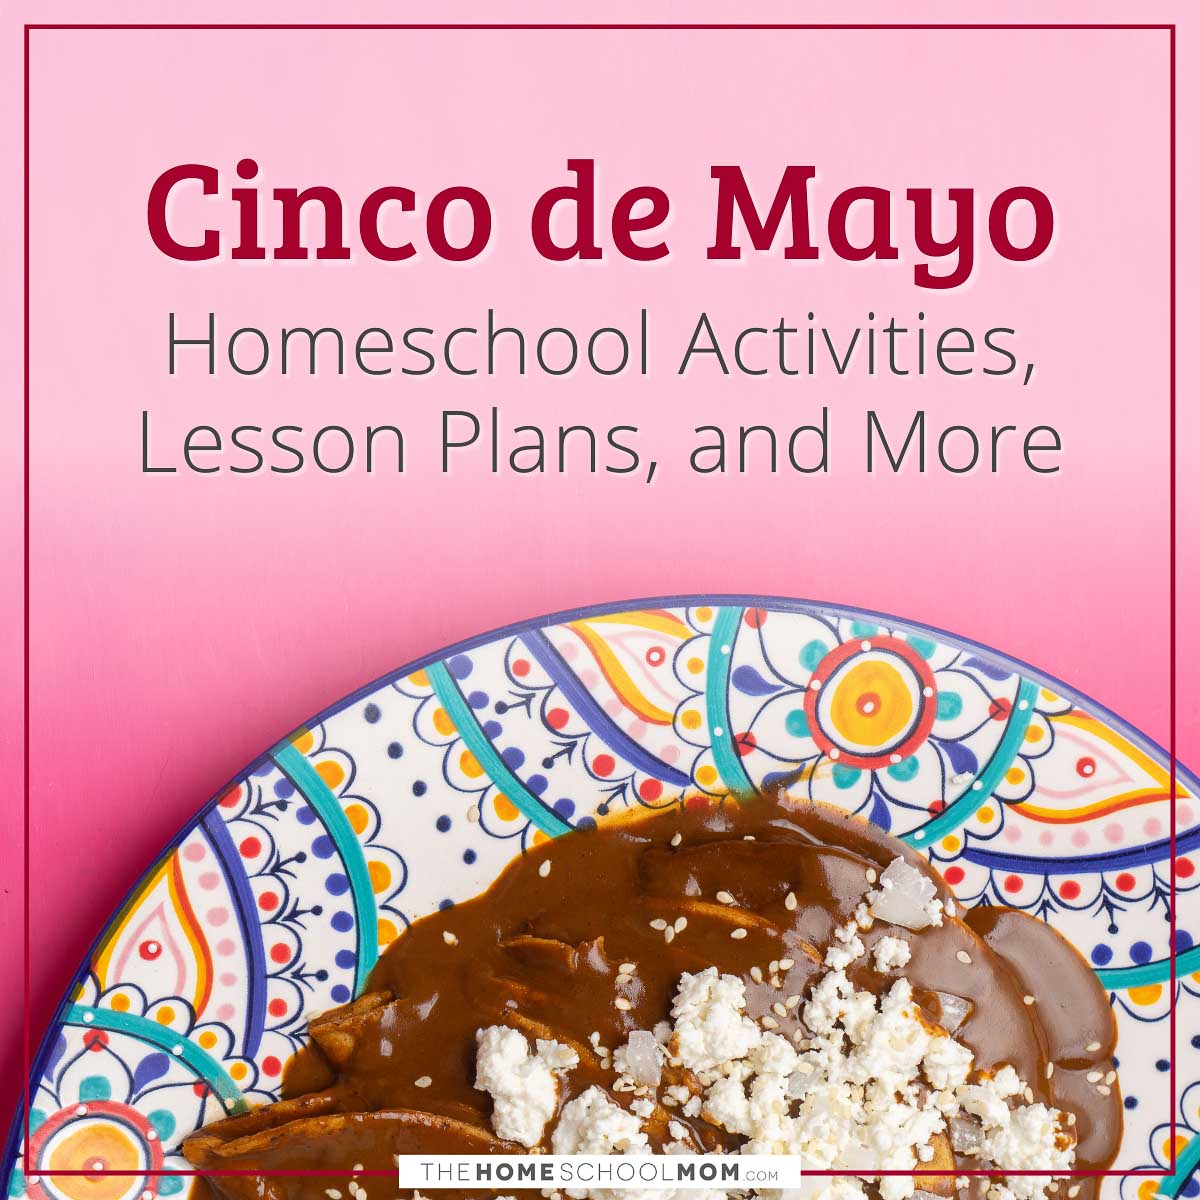 Cinco de Mayo Homeschool Activities, Lesson Plans, and More.